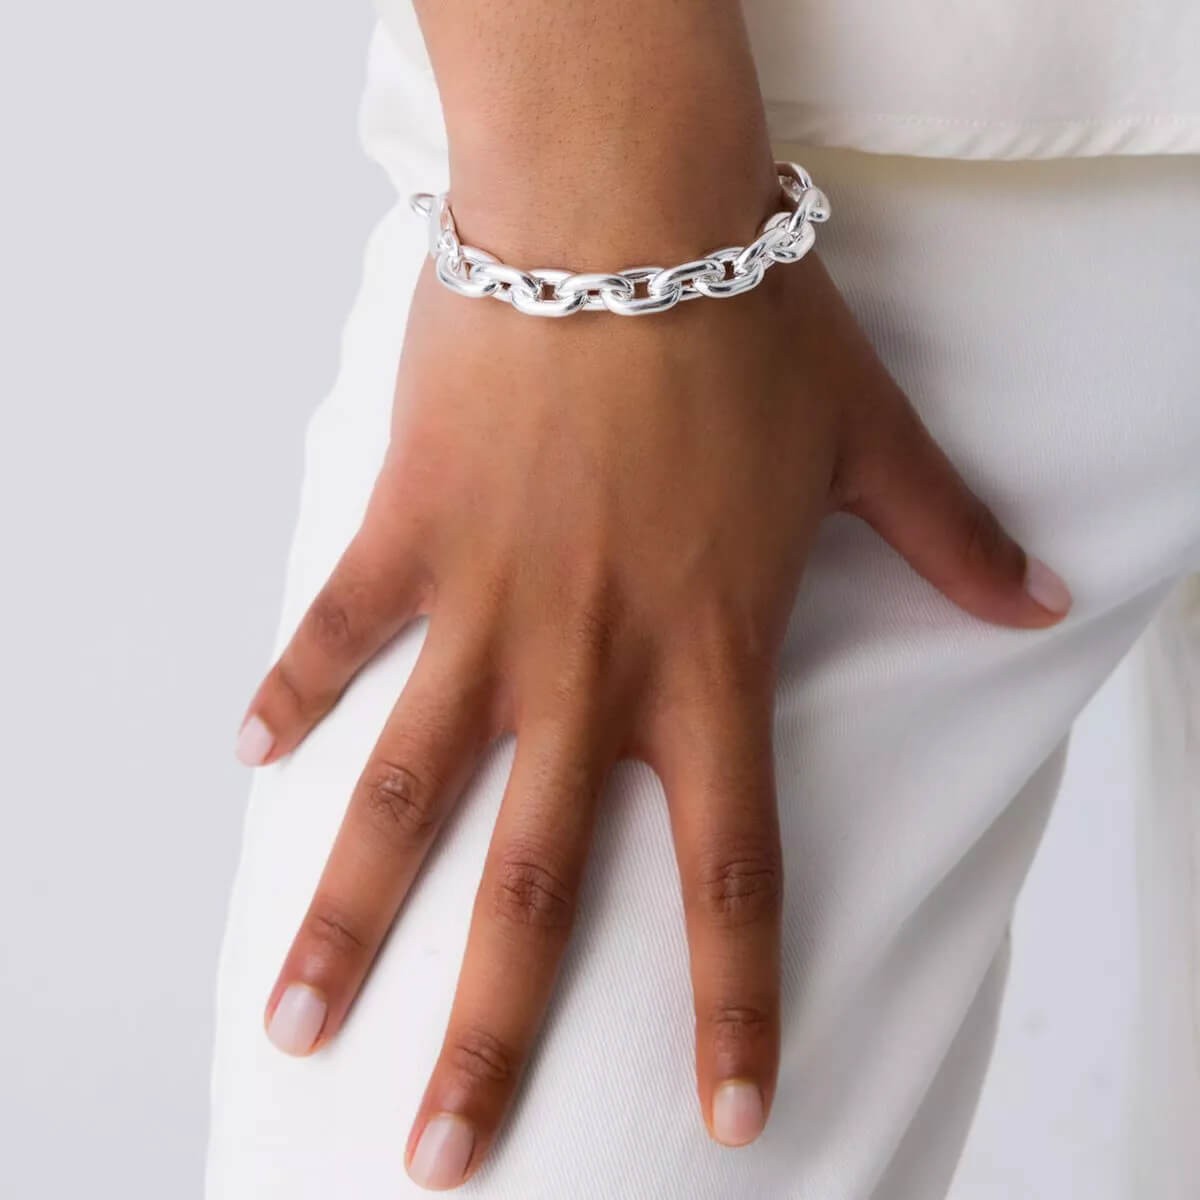 Chunky Bracelet 17 cm - Armbänder - Silber